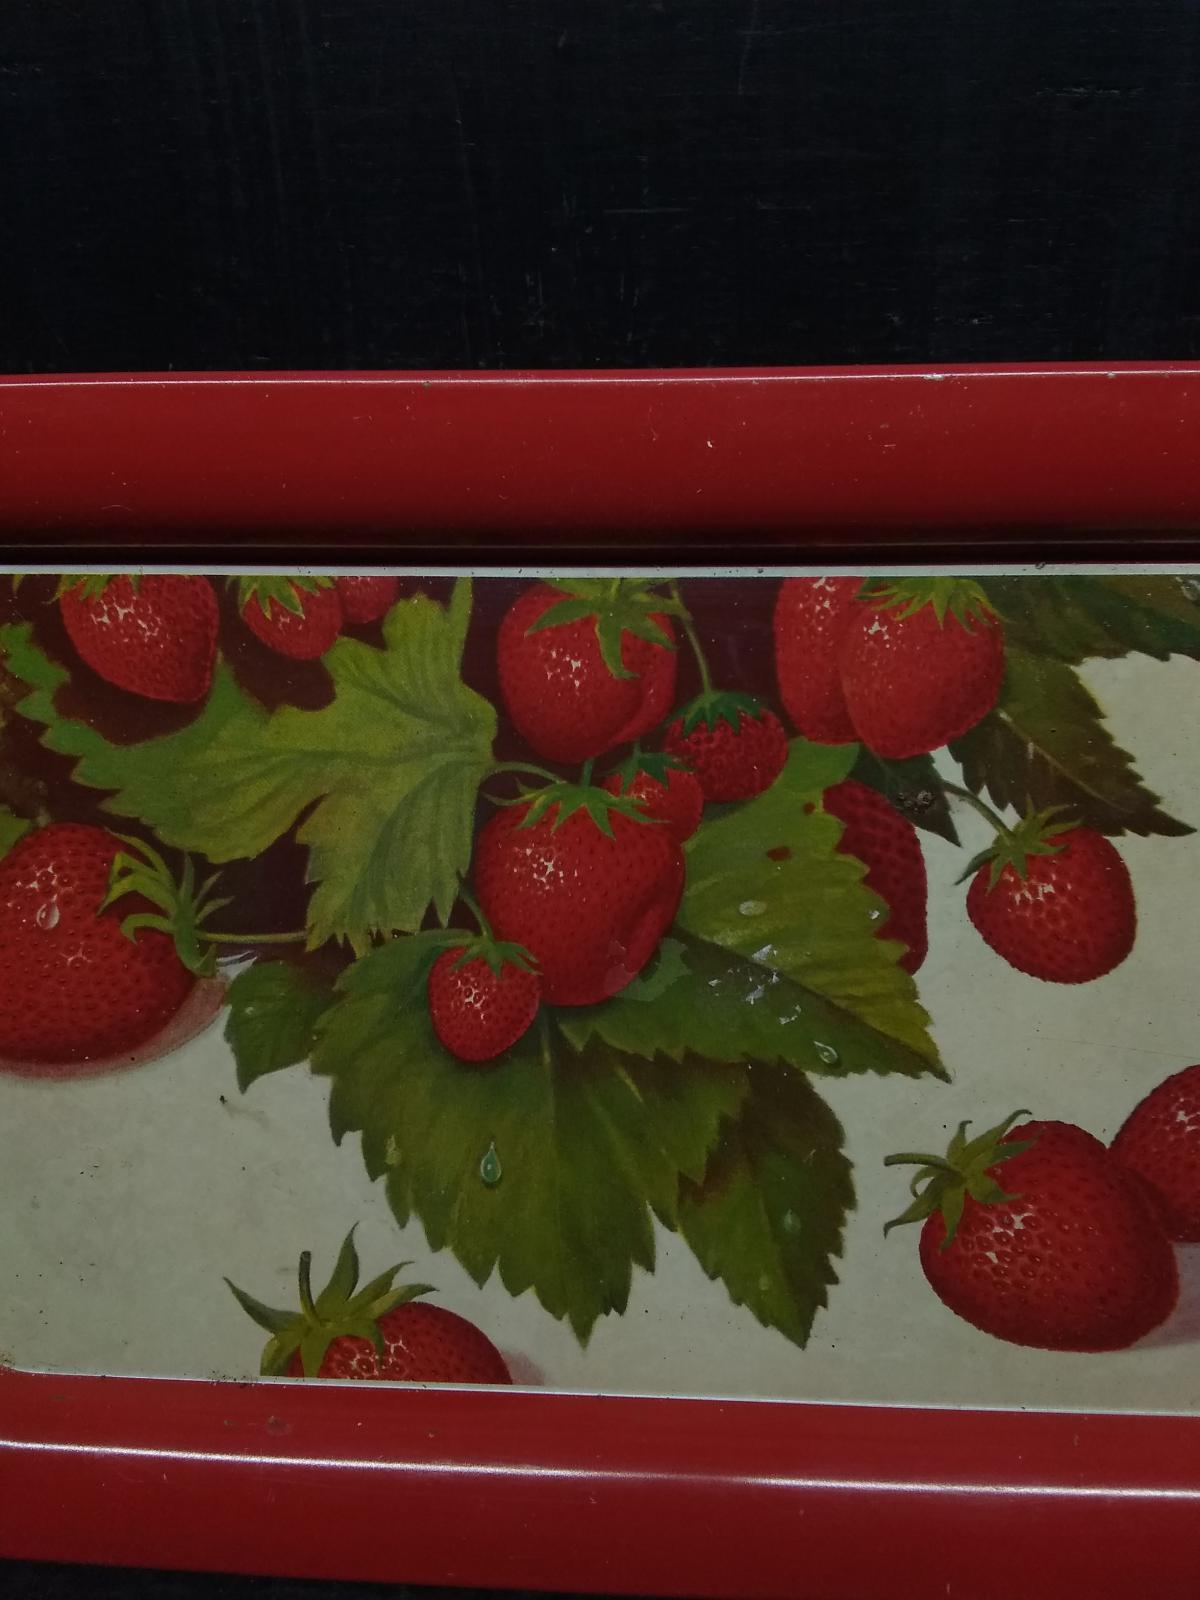 Vintage MCM Strawberry Serving Tray